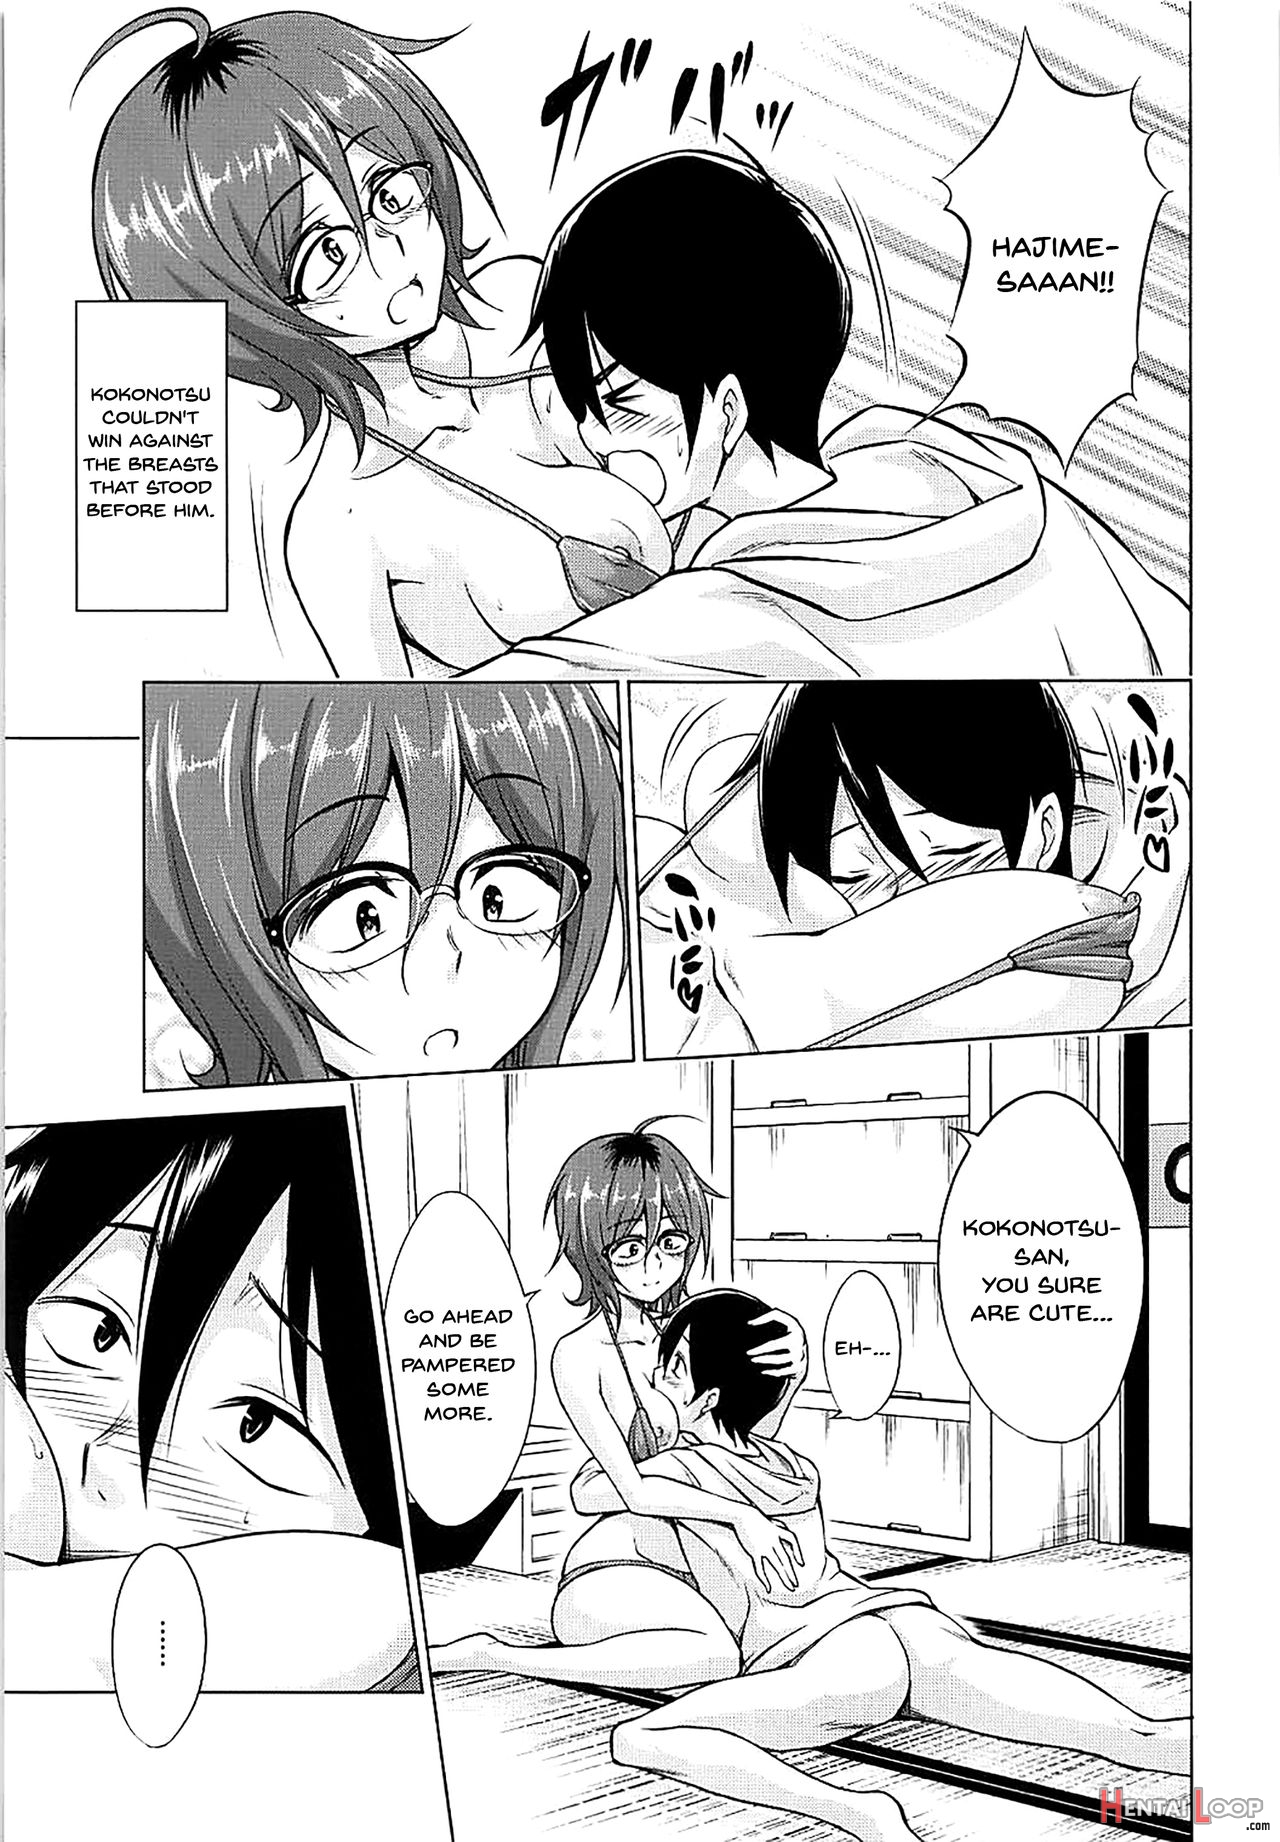 For Hajime's Ero Doujins page 10